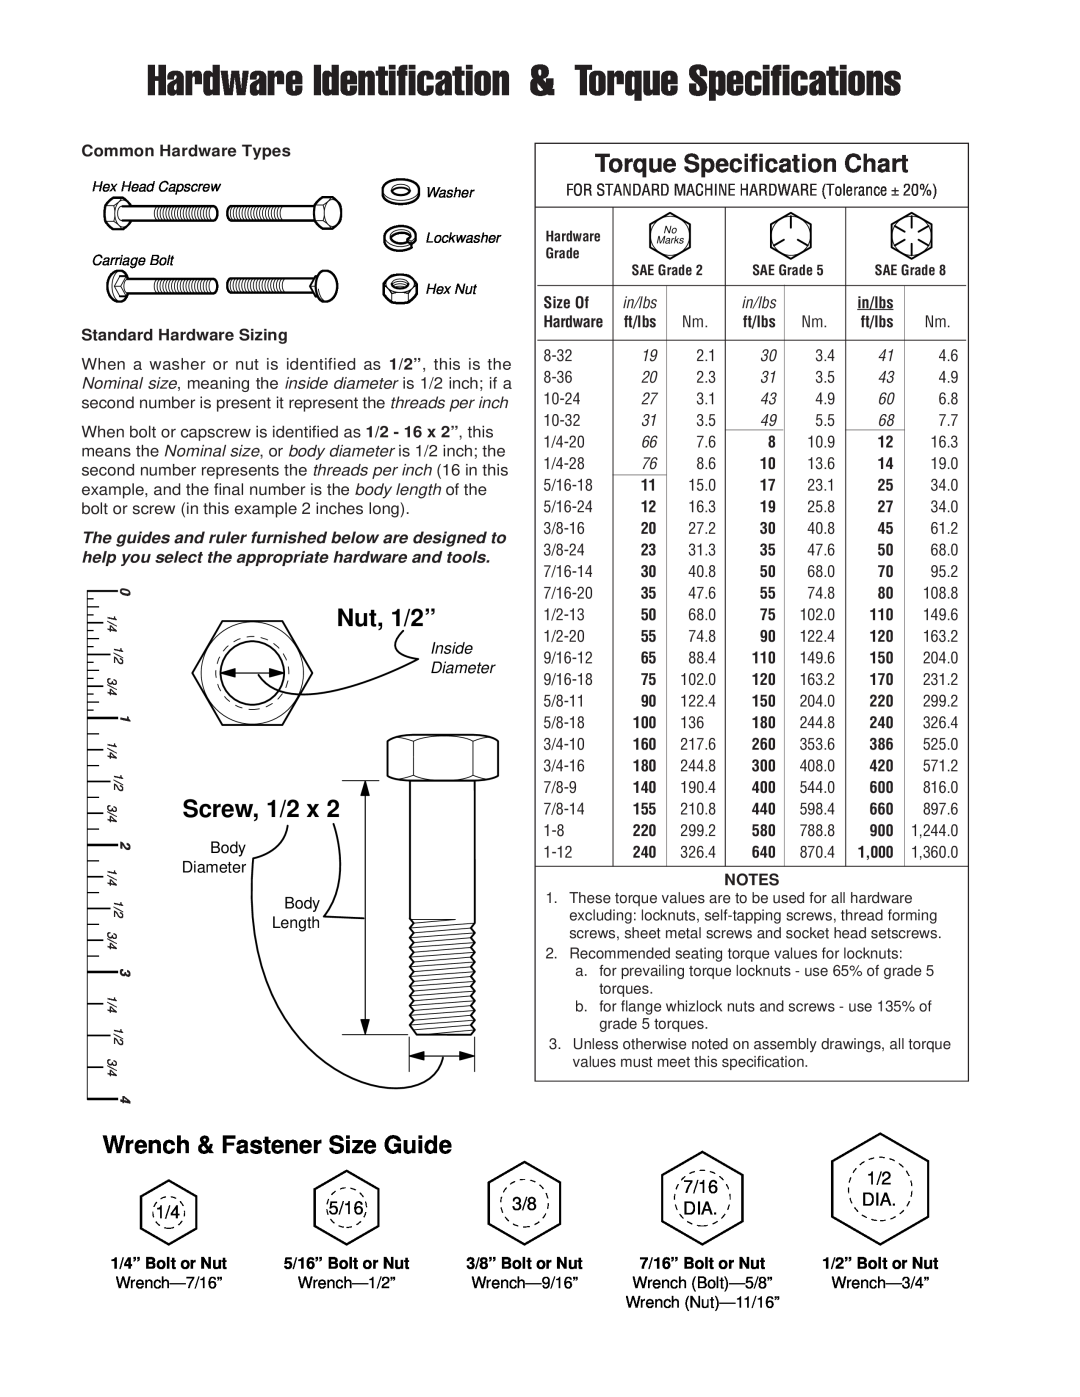 Massey Ferguson L&G 1693583 manual Hardware Identification & Torque Specifications, Torque Specification Chart, Nut, 1/2” 